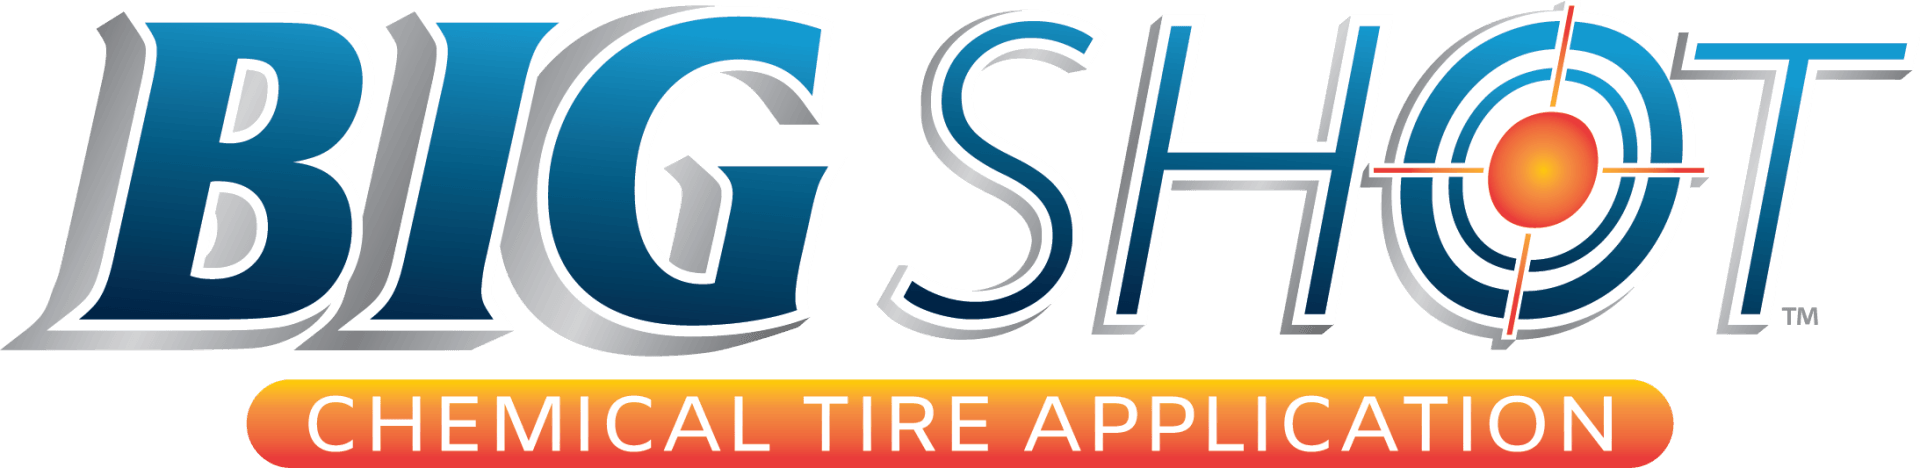 Big Shot - Chemical Tire Application